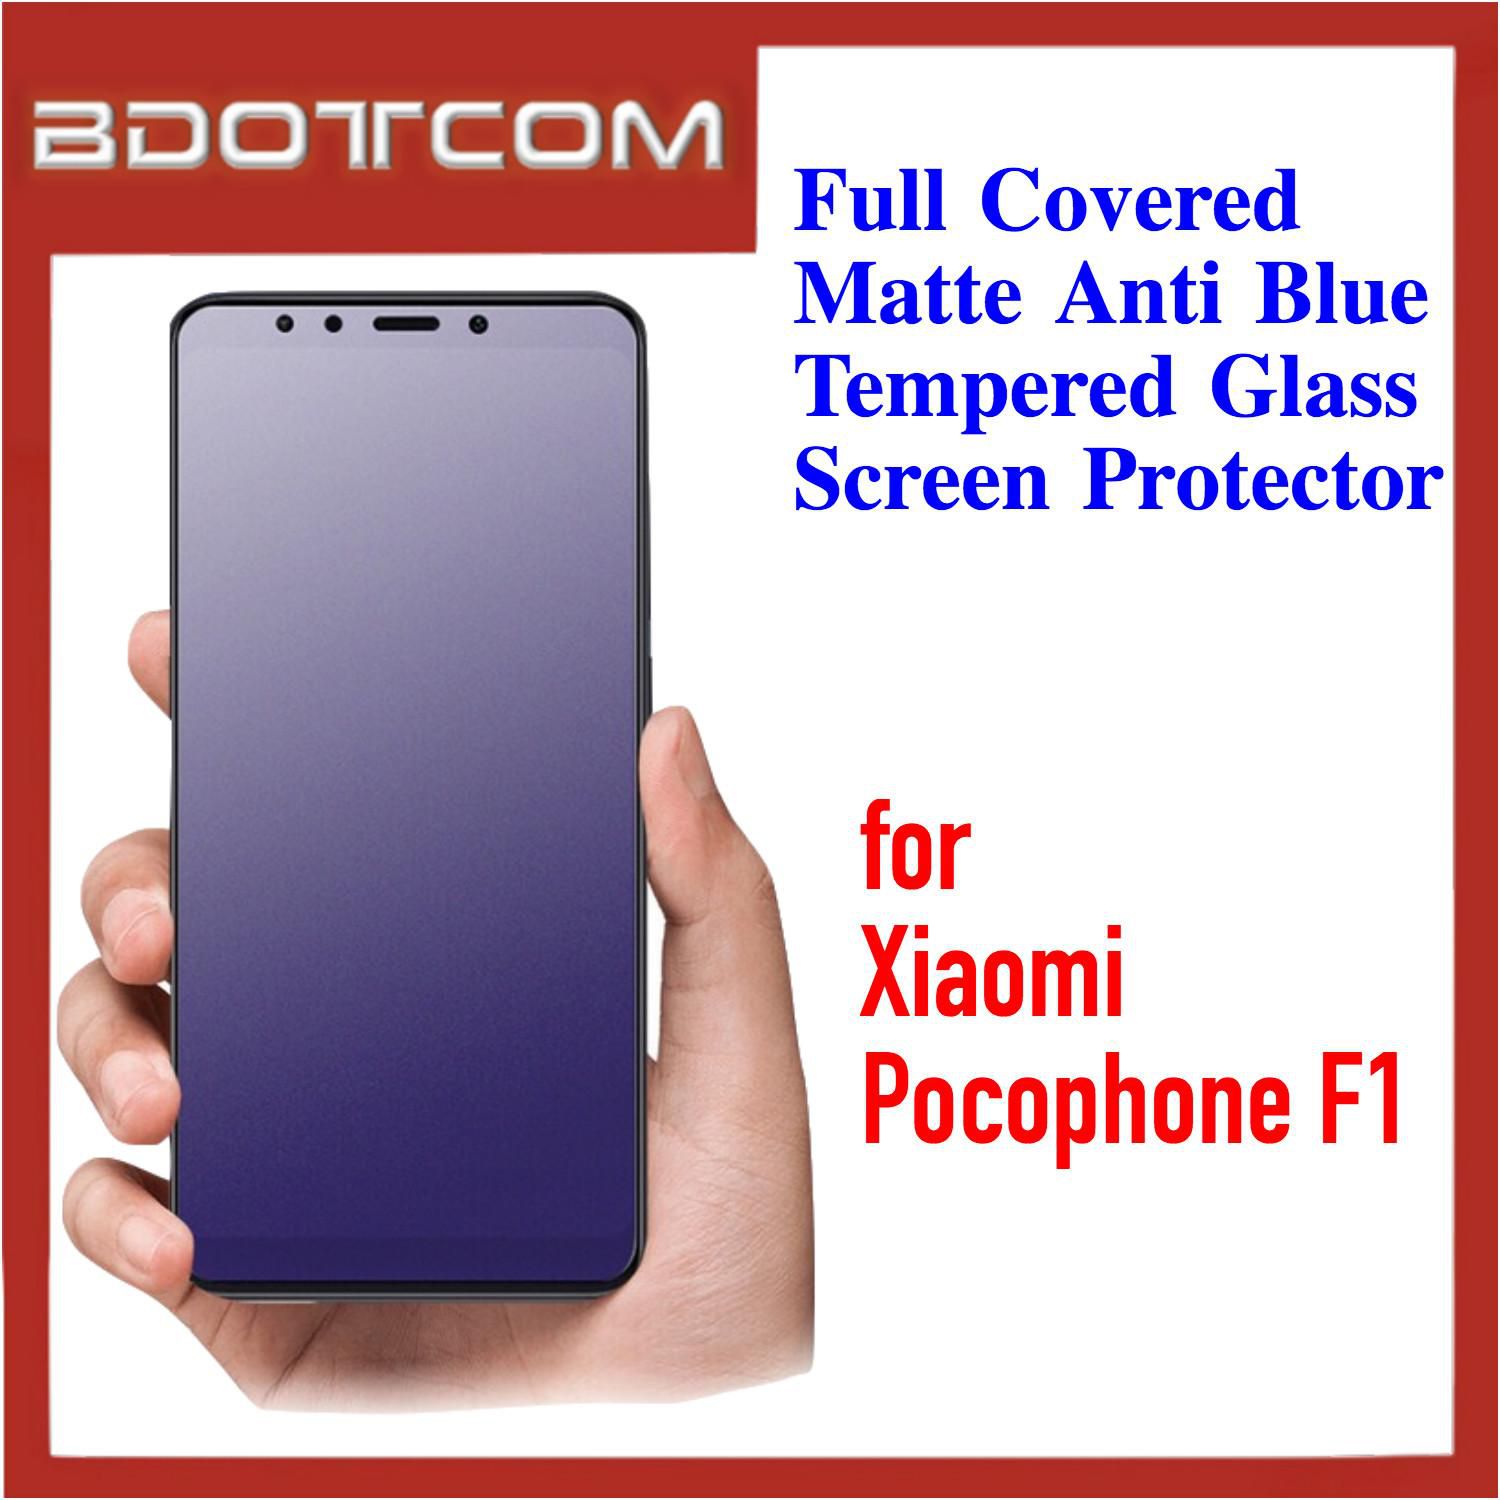 Bdotcom Full Covered Matte Anti Blue Tempered Glass Screen for Xiaomi Pocophone F1